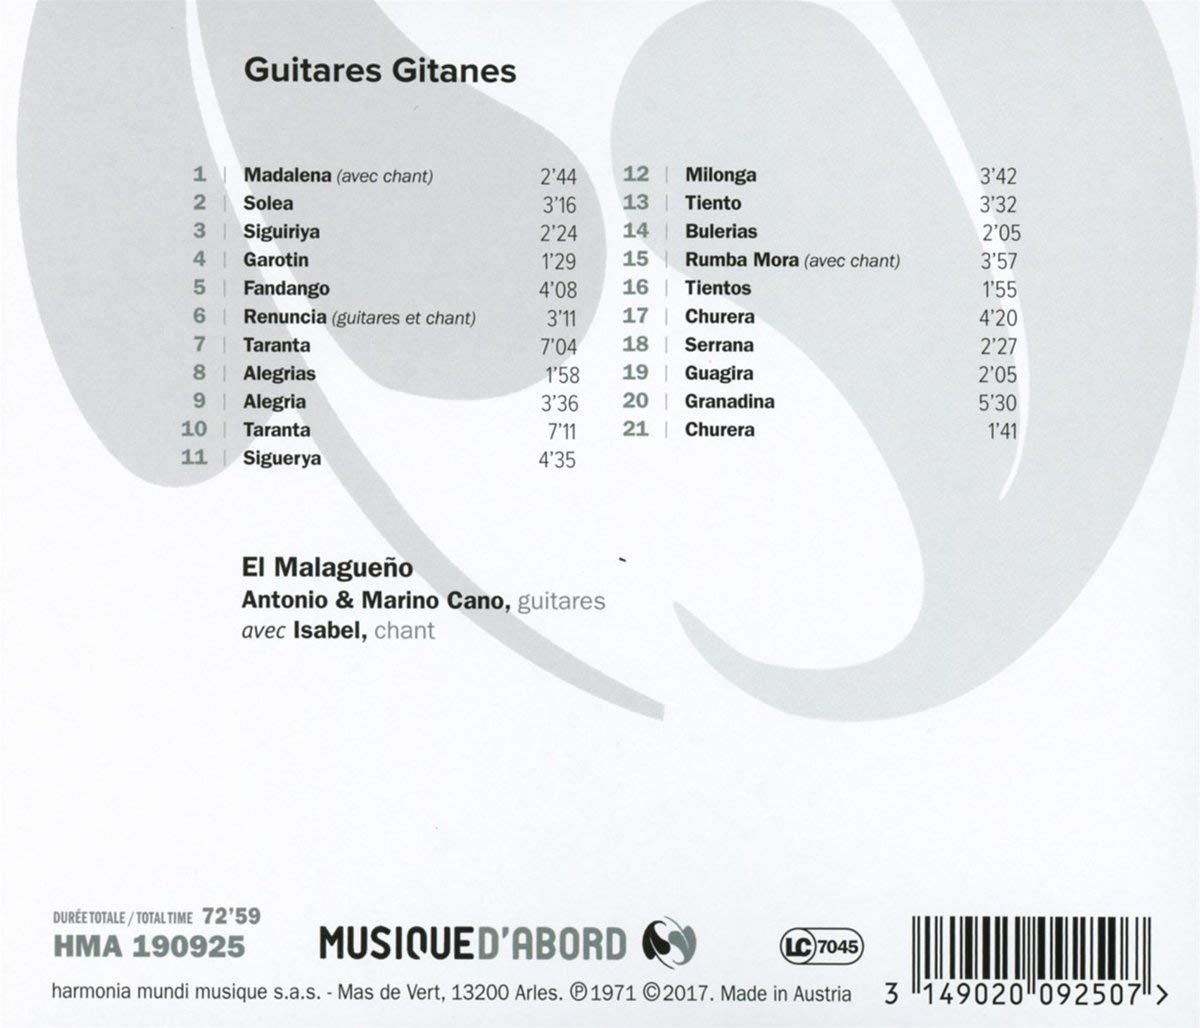 Hiszpania - flamenco, Guitares gitanes - slide-1